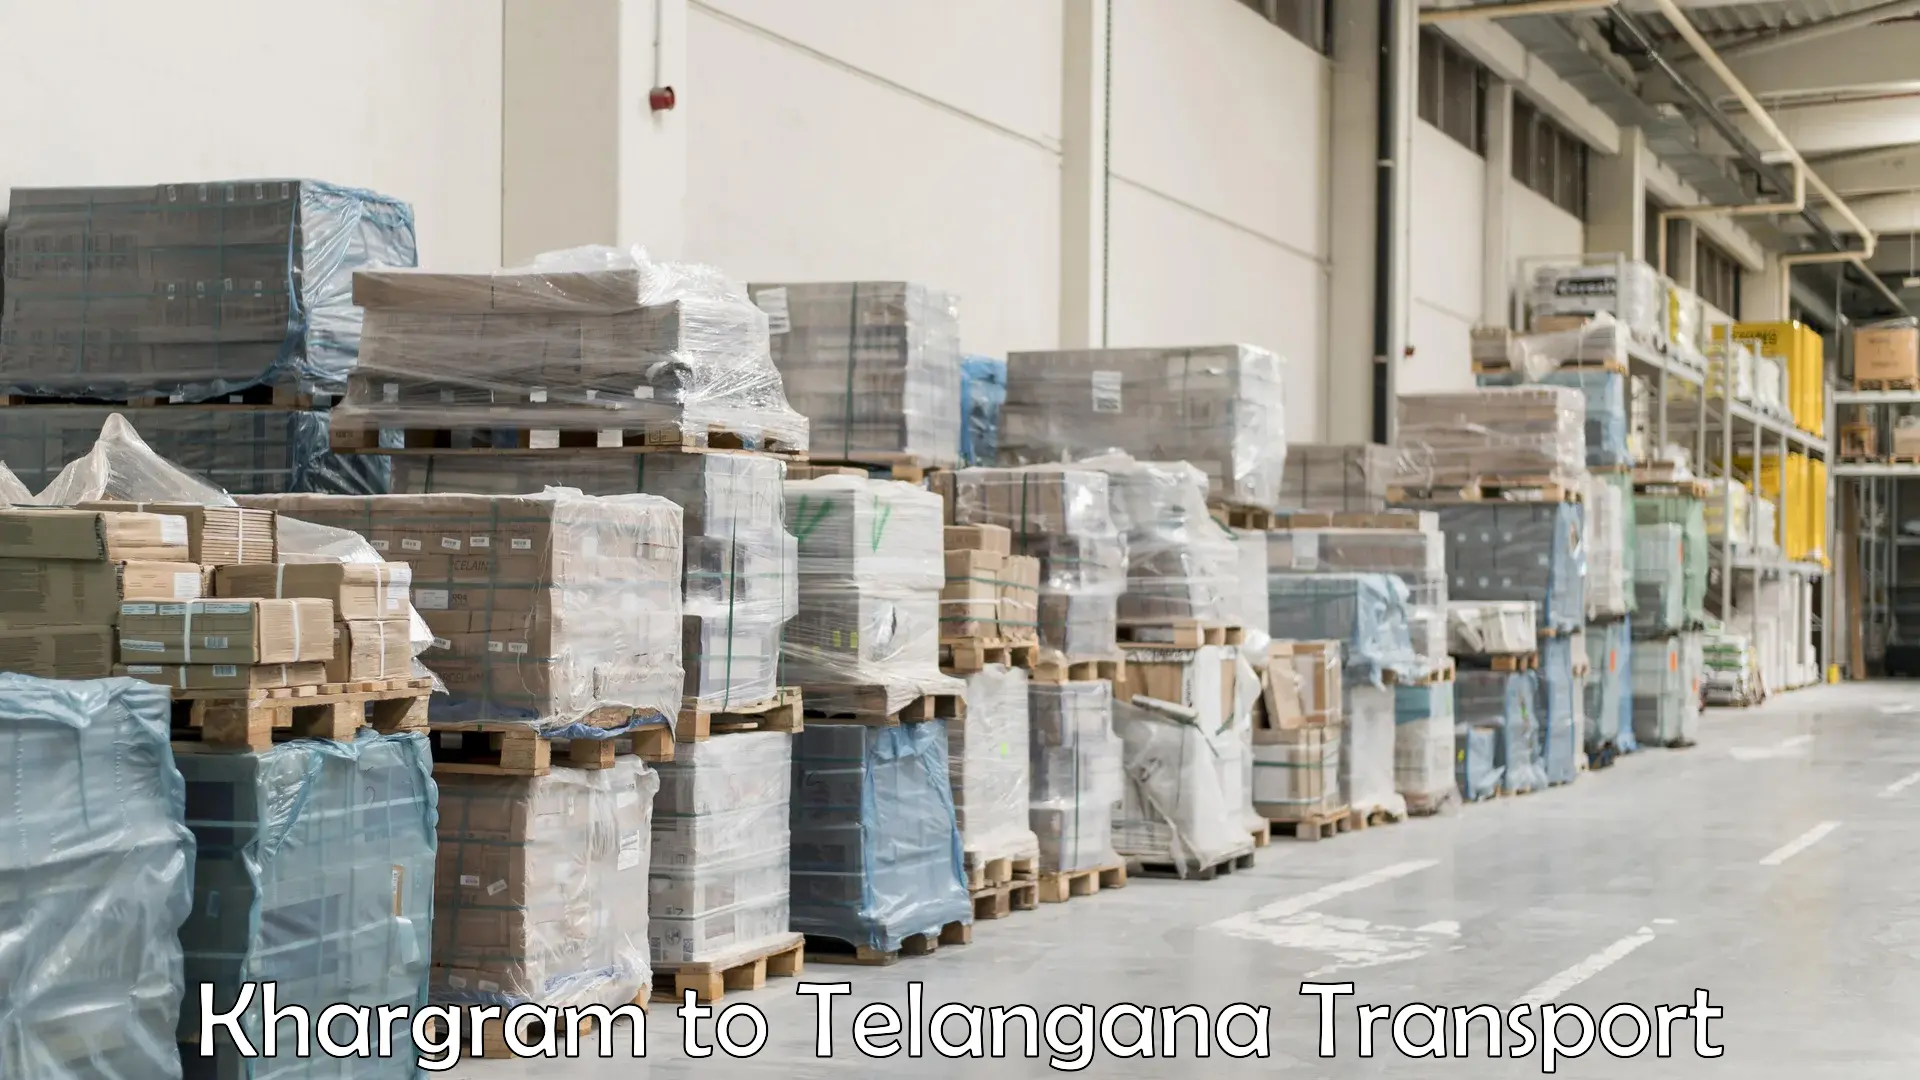 Truck transport companies in India Khargram to Telangana